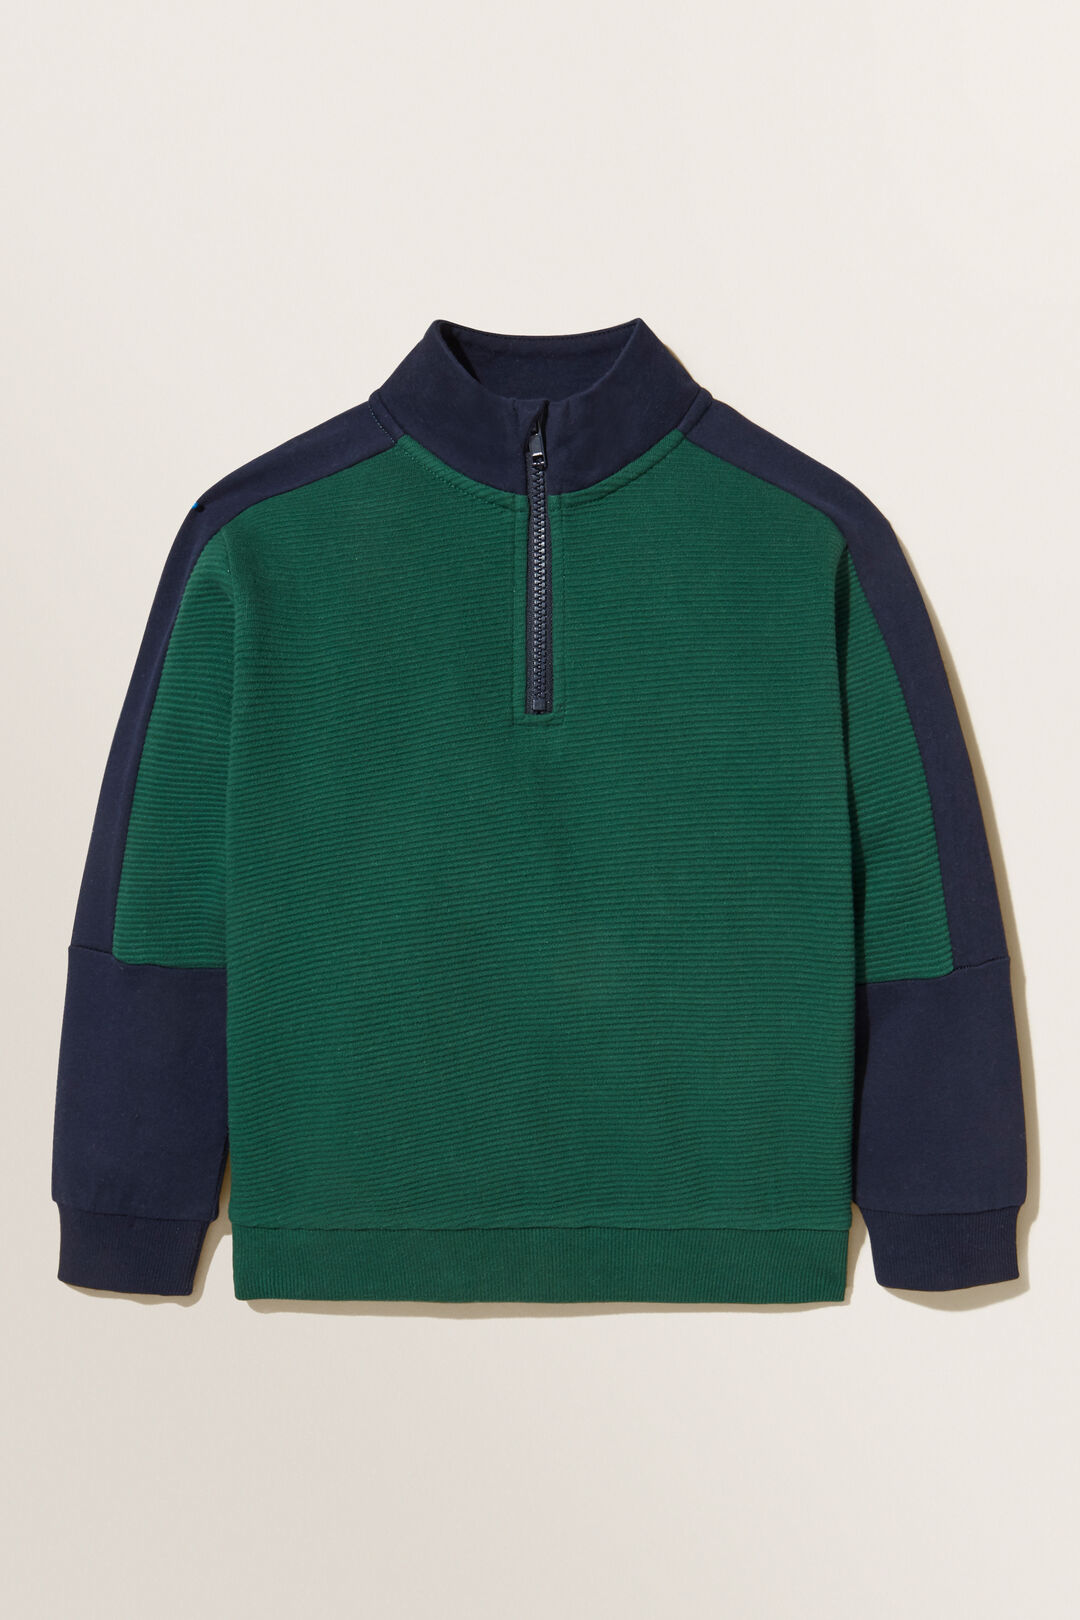 Panelled Zip Sweater  Bottle Green  hi-res